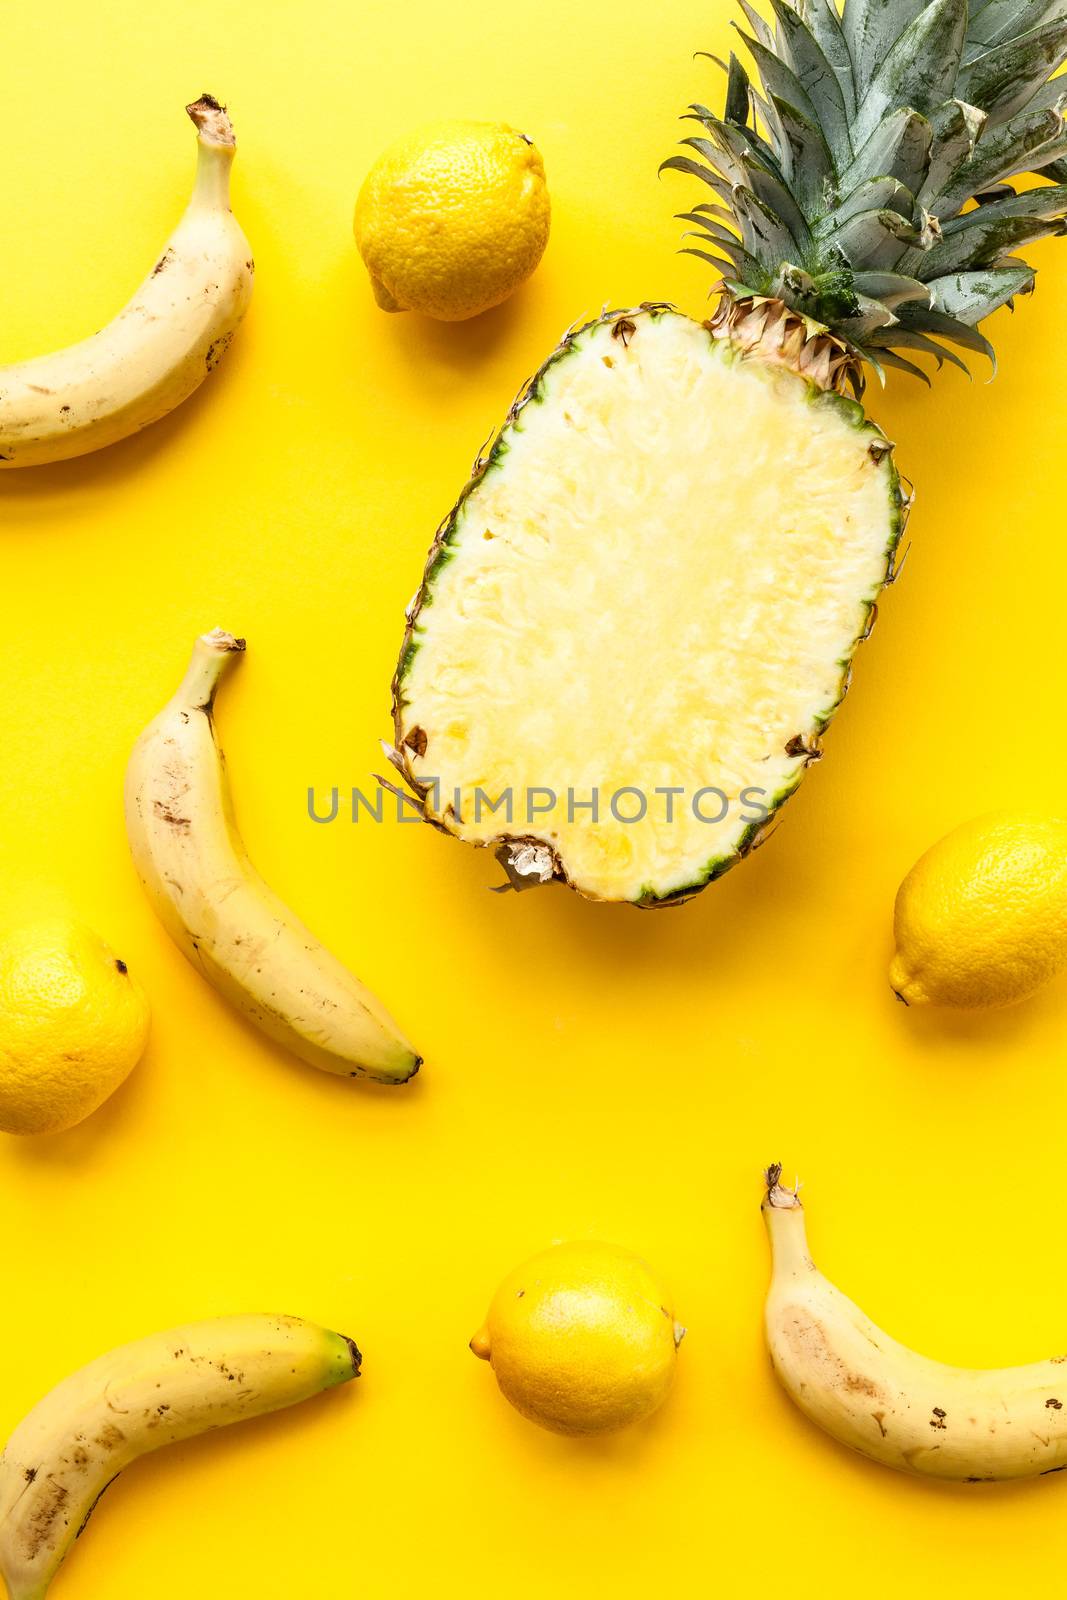 Pineapple, lemons and bananas on yellow background by andongob